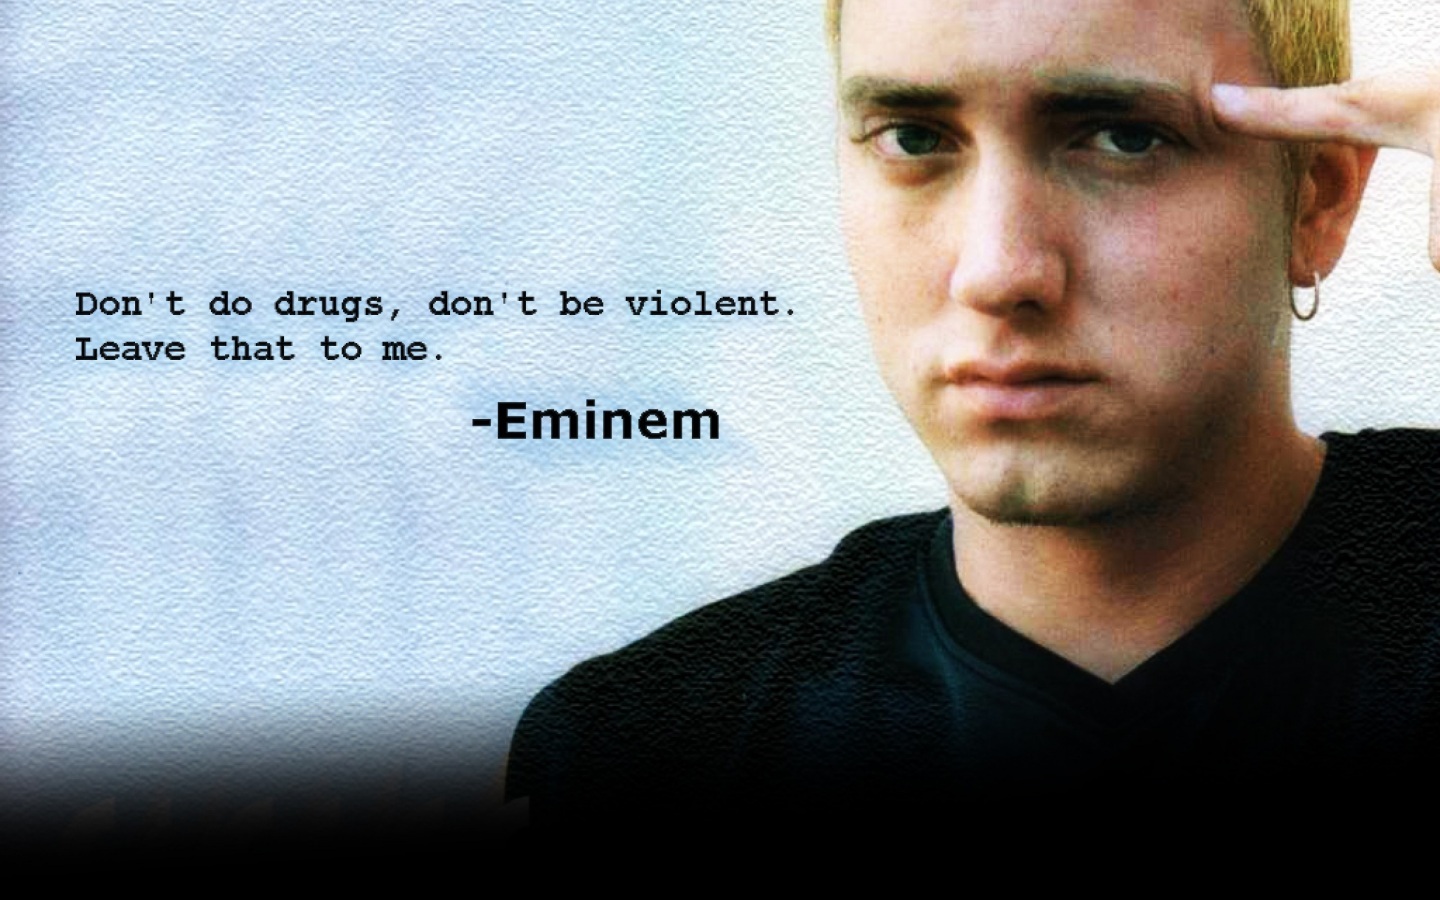 Eminem Message HD Wallpaper Photo Shared By Loleta Fans Share